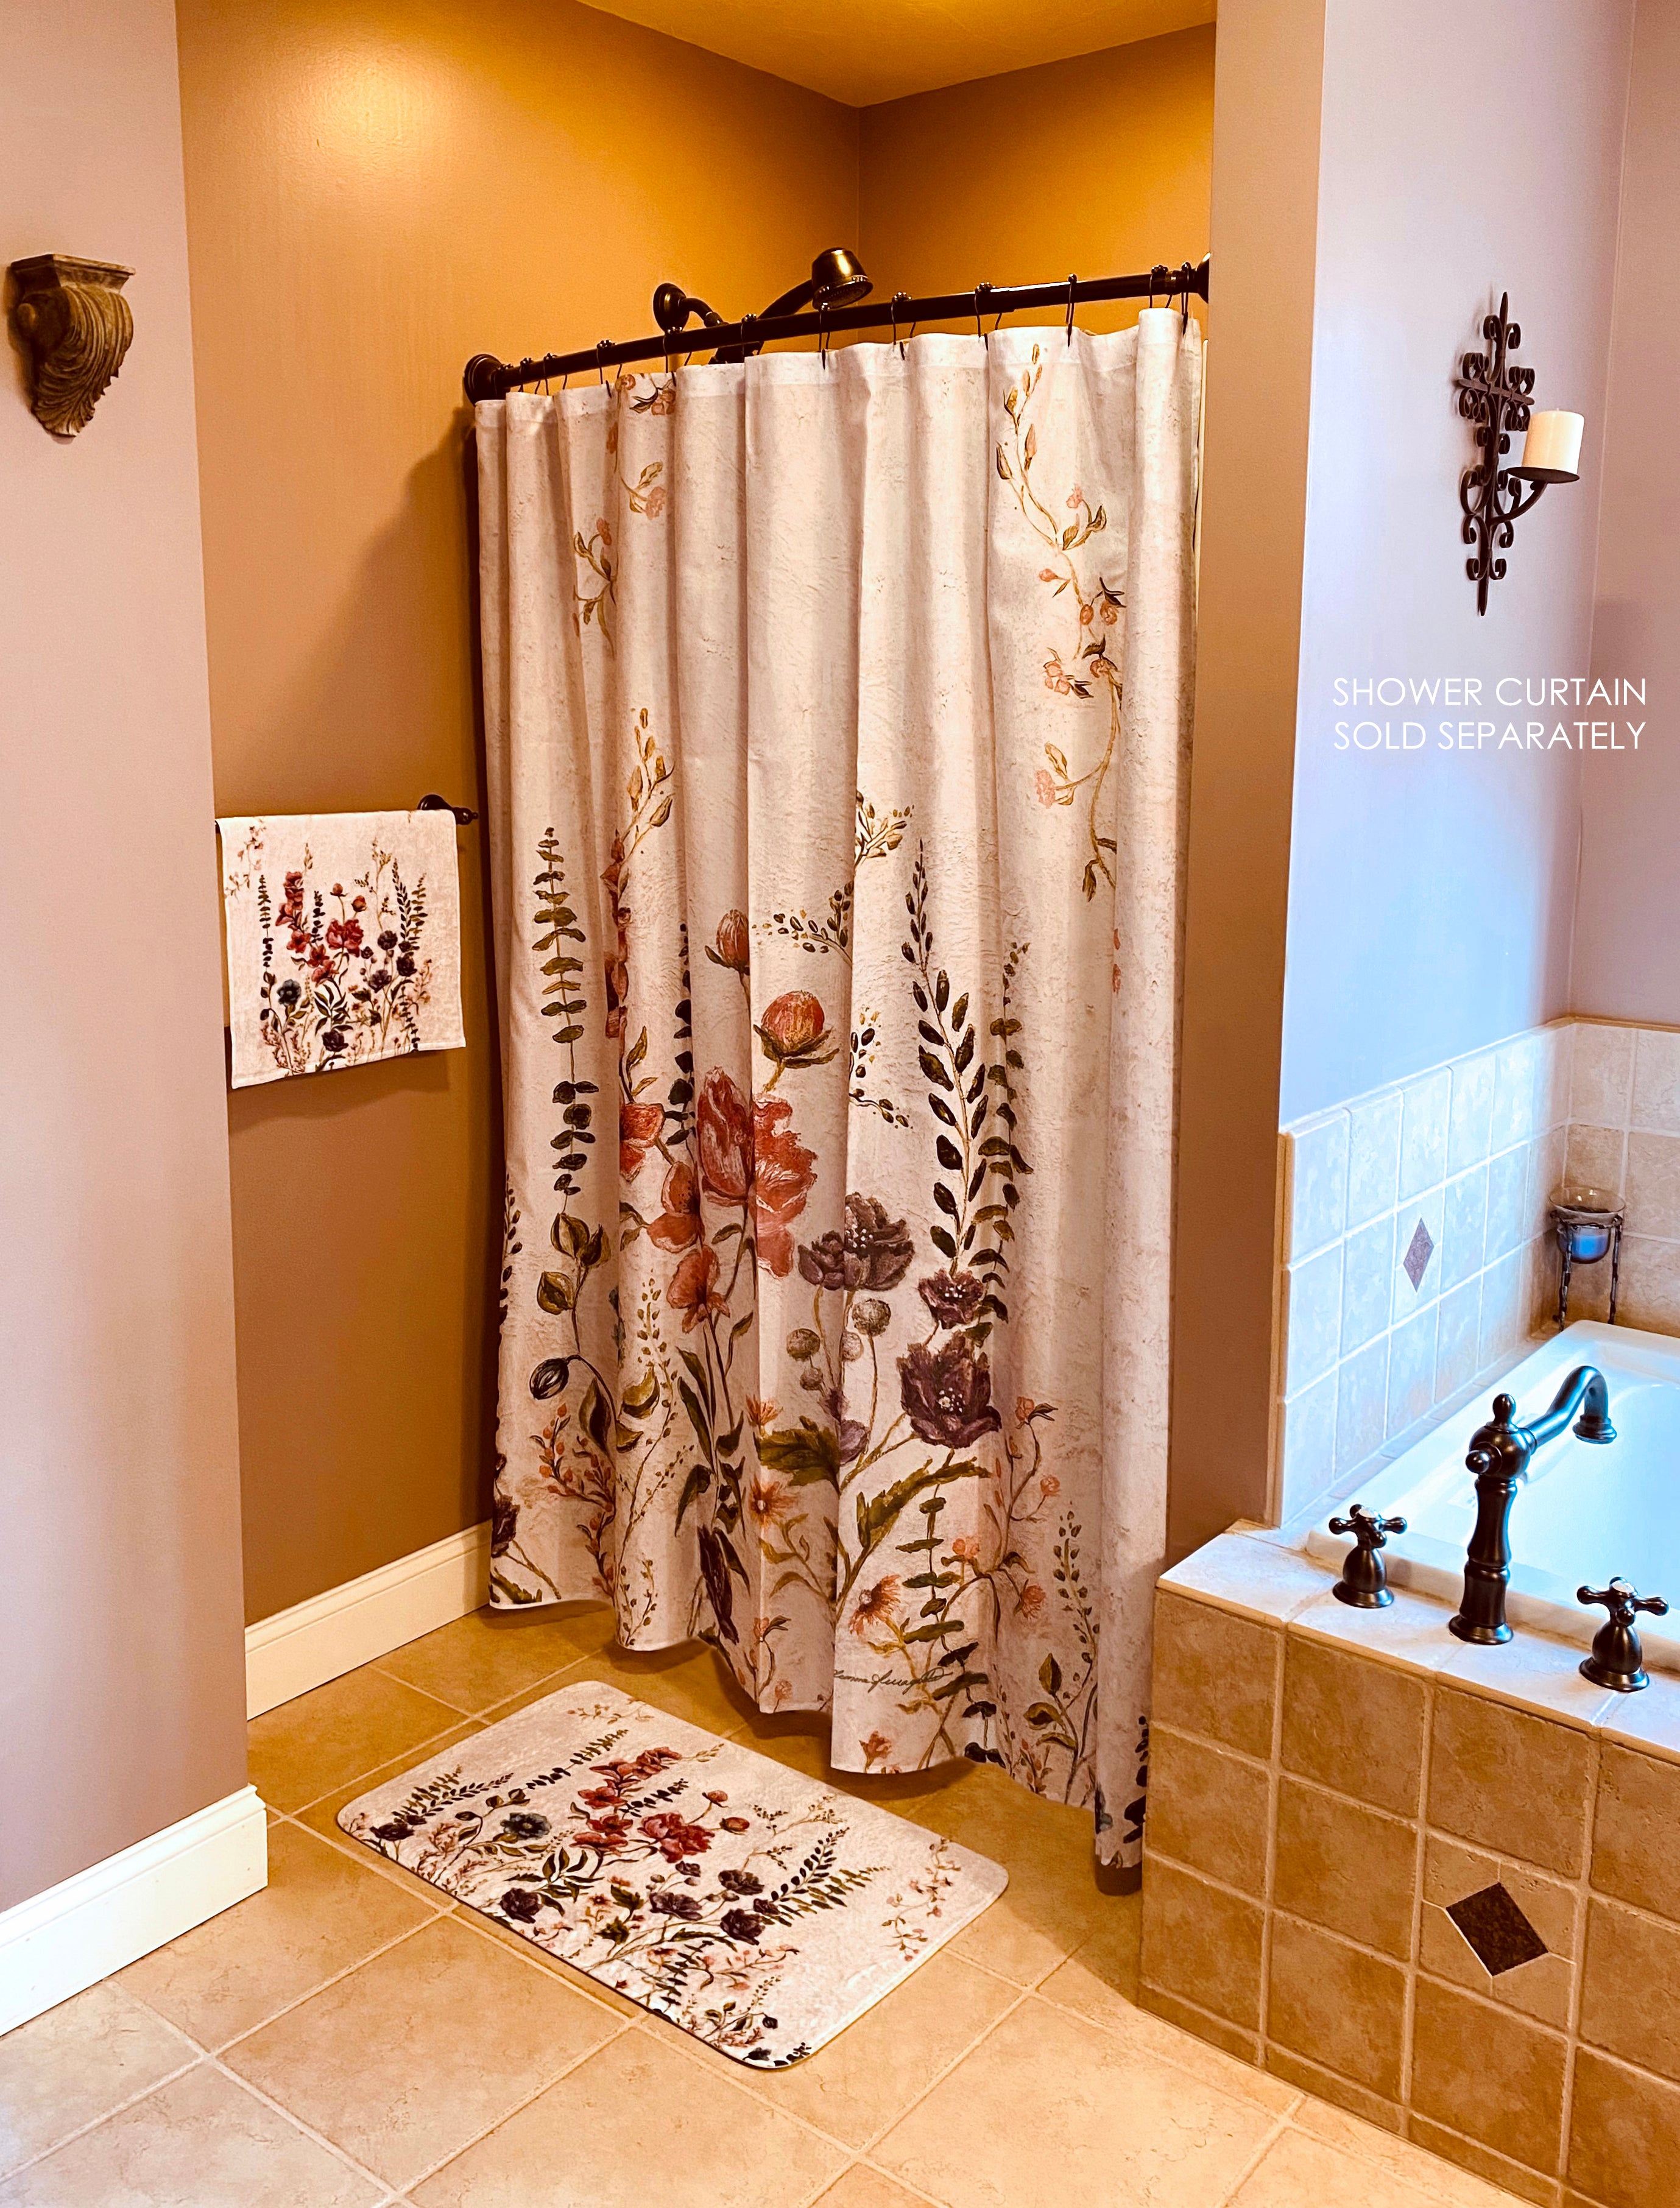 White Cosmos Bathroom Mat & Hand Towel 2 - Piece Set – ELEONORA FERRAGATTA